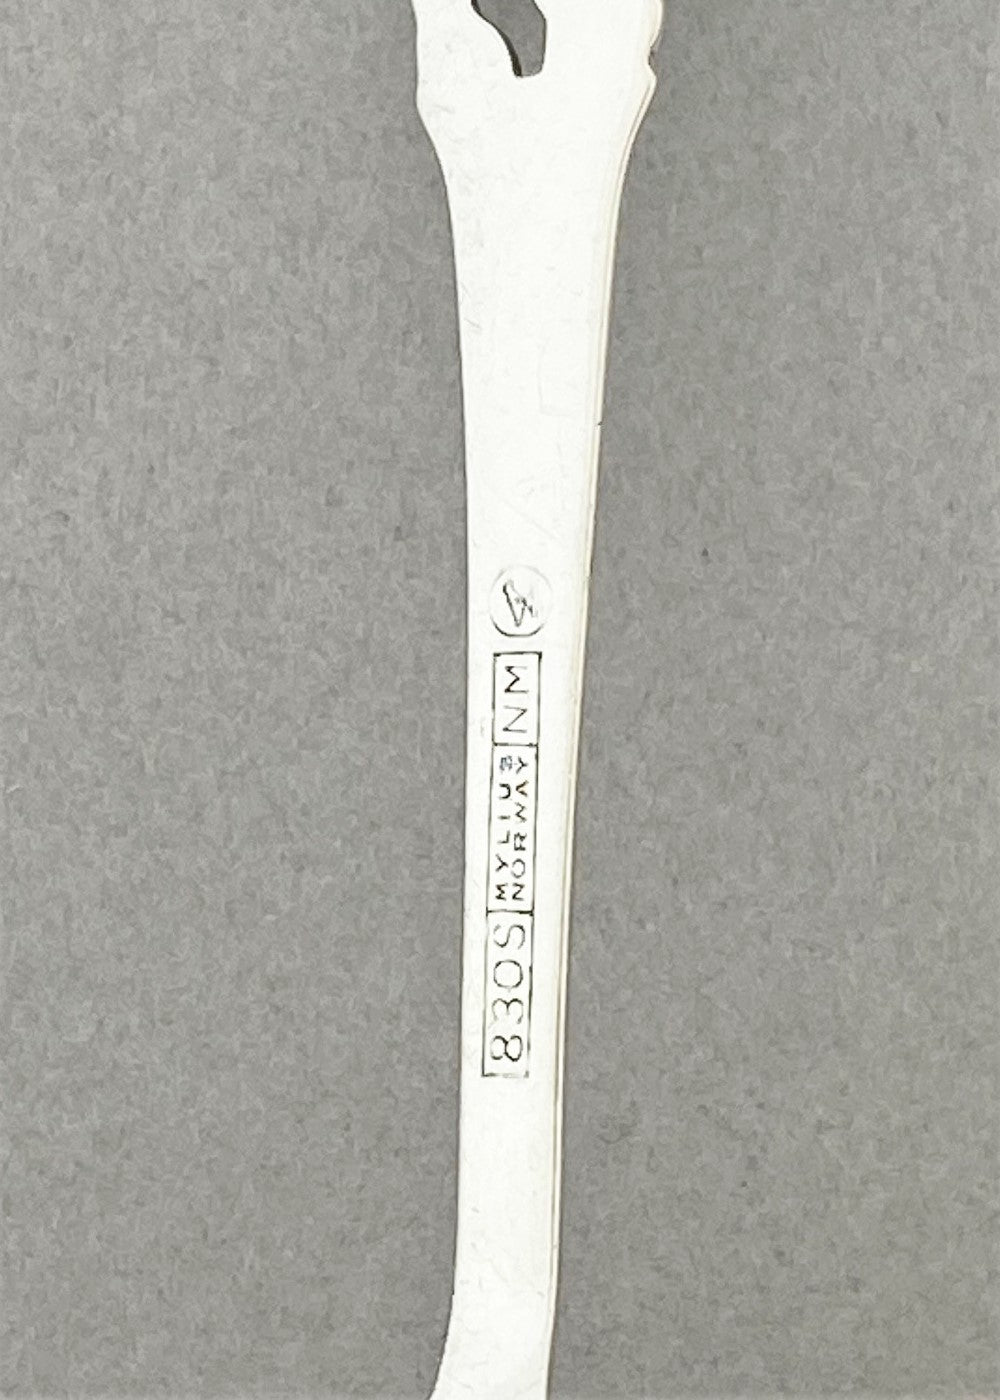 Vintage Telesilver mocha spoon